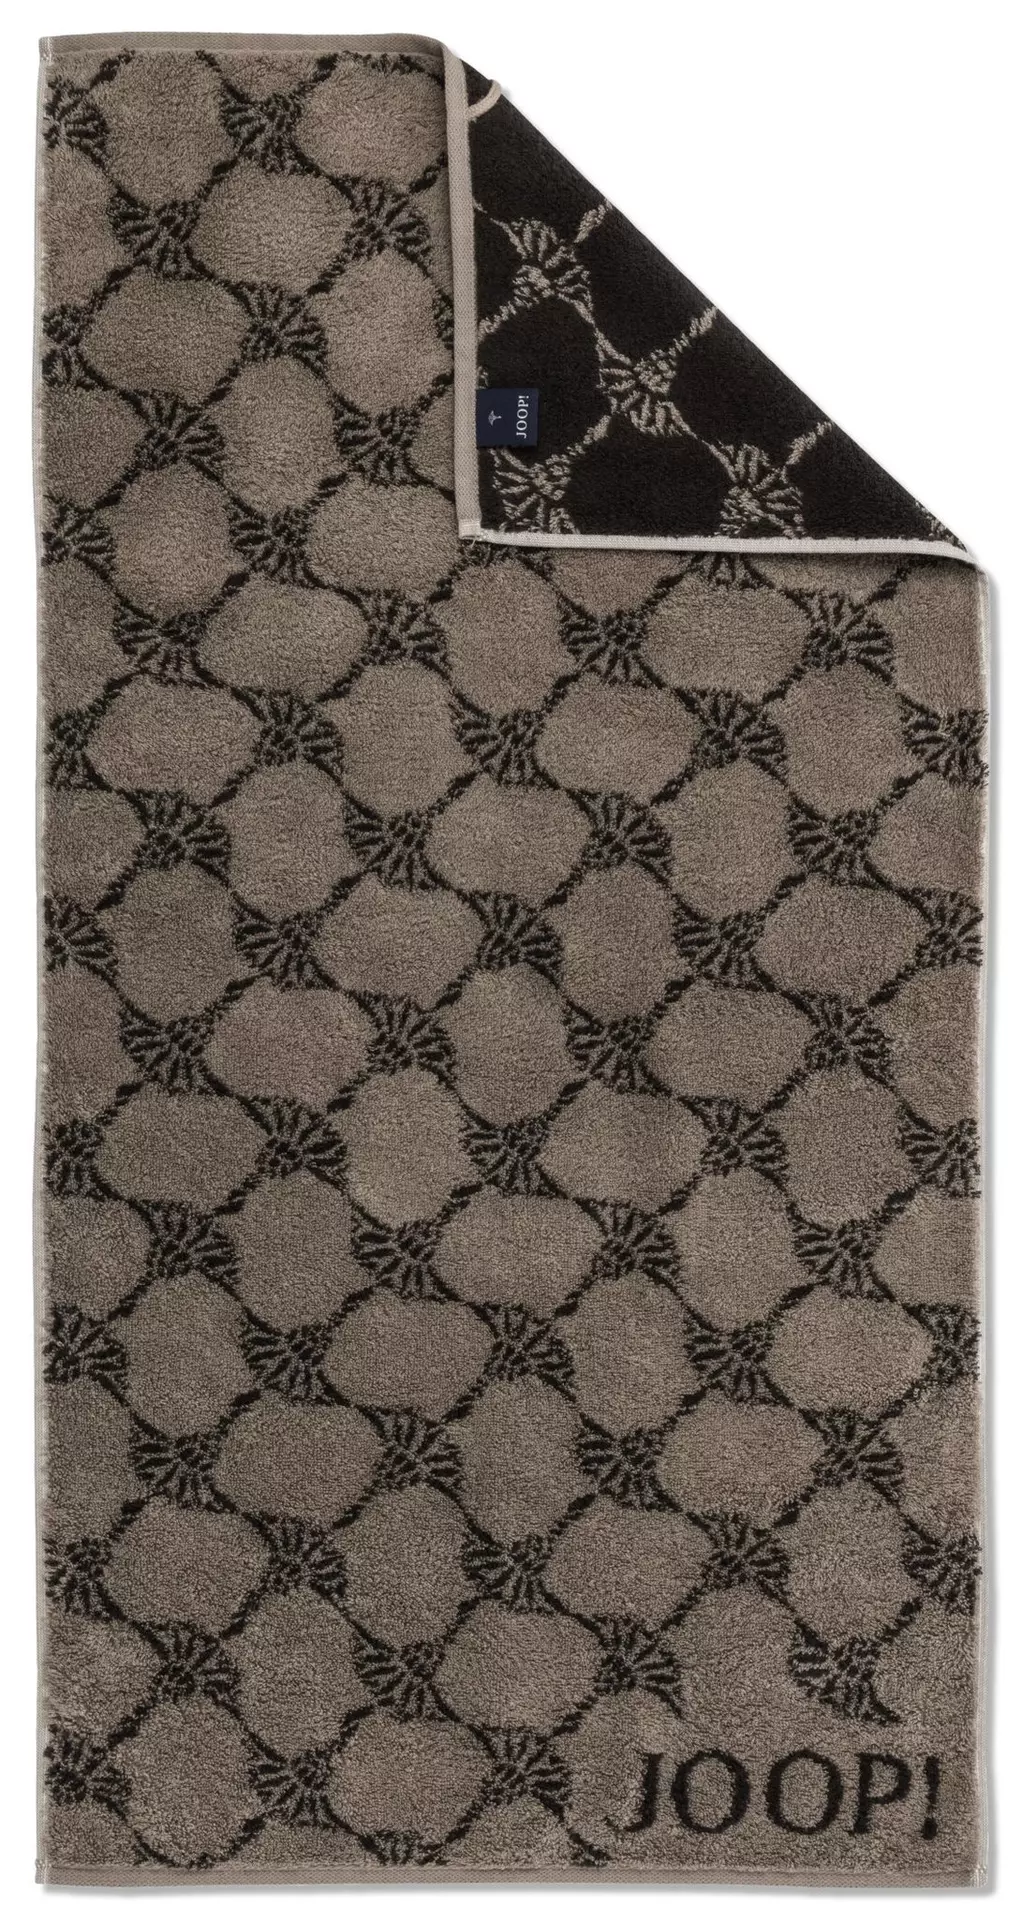 Handtuch Classic Cornflower JOOP Textil 50 x 100 cm